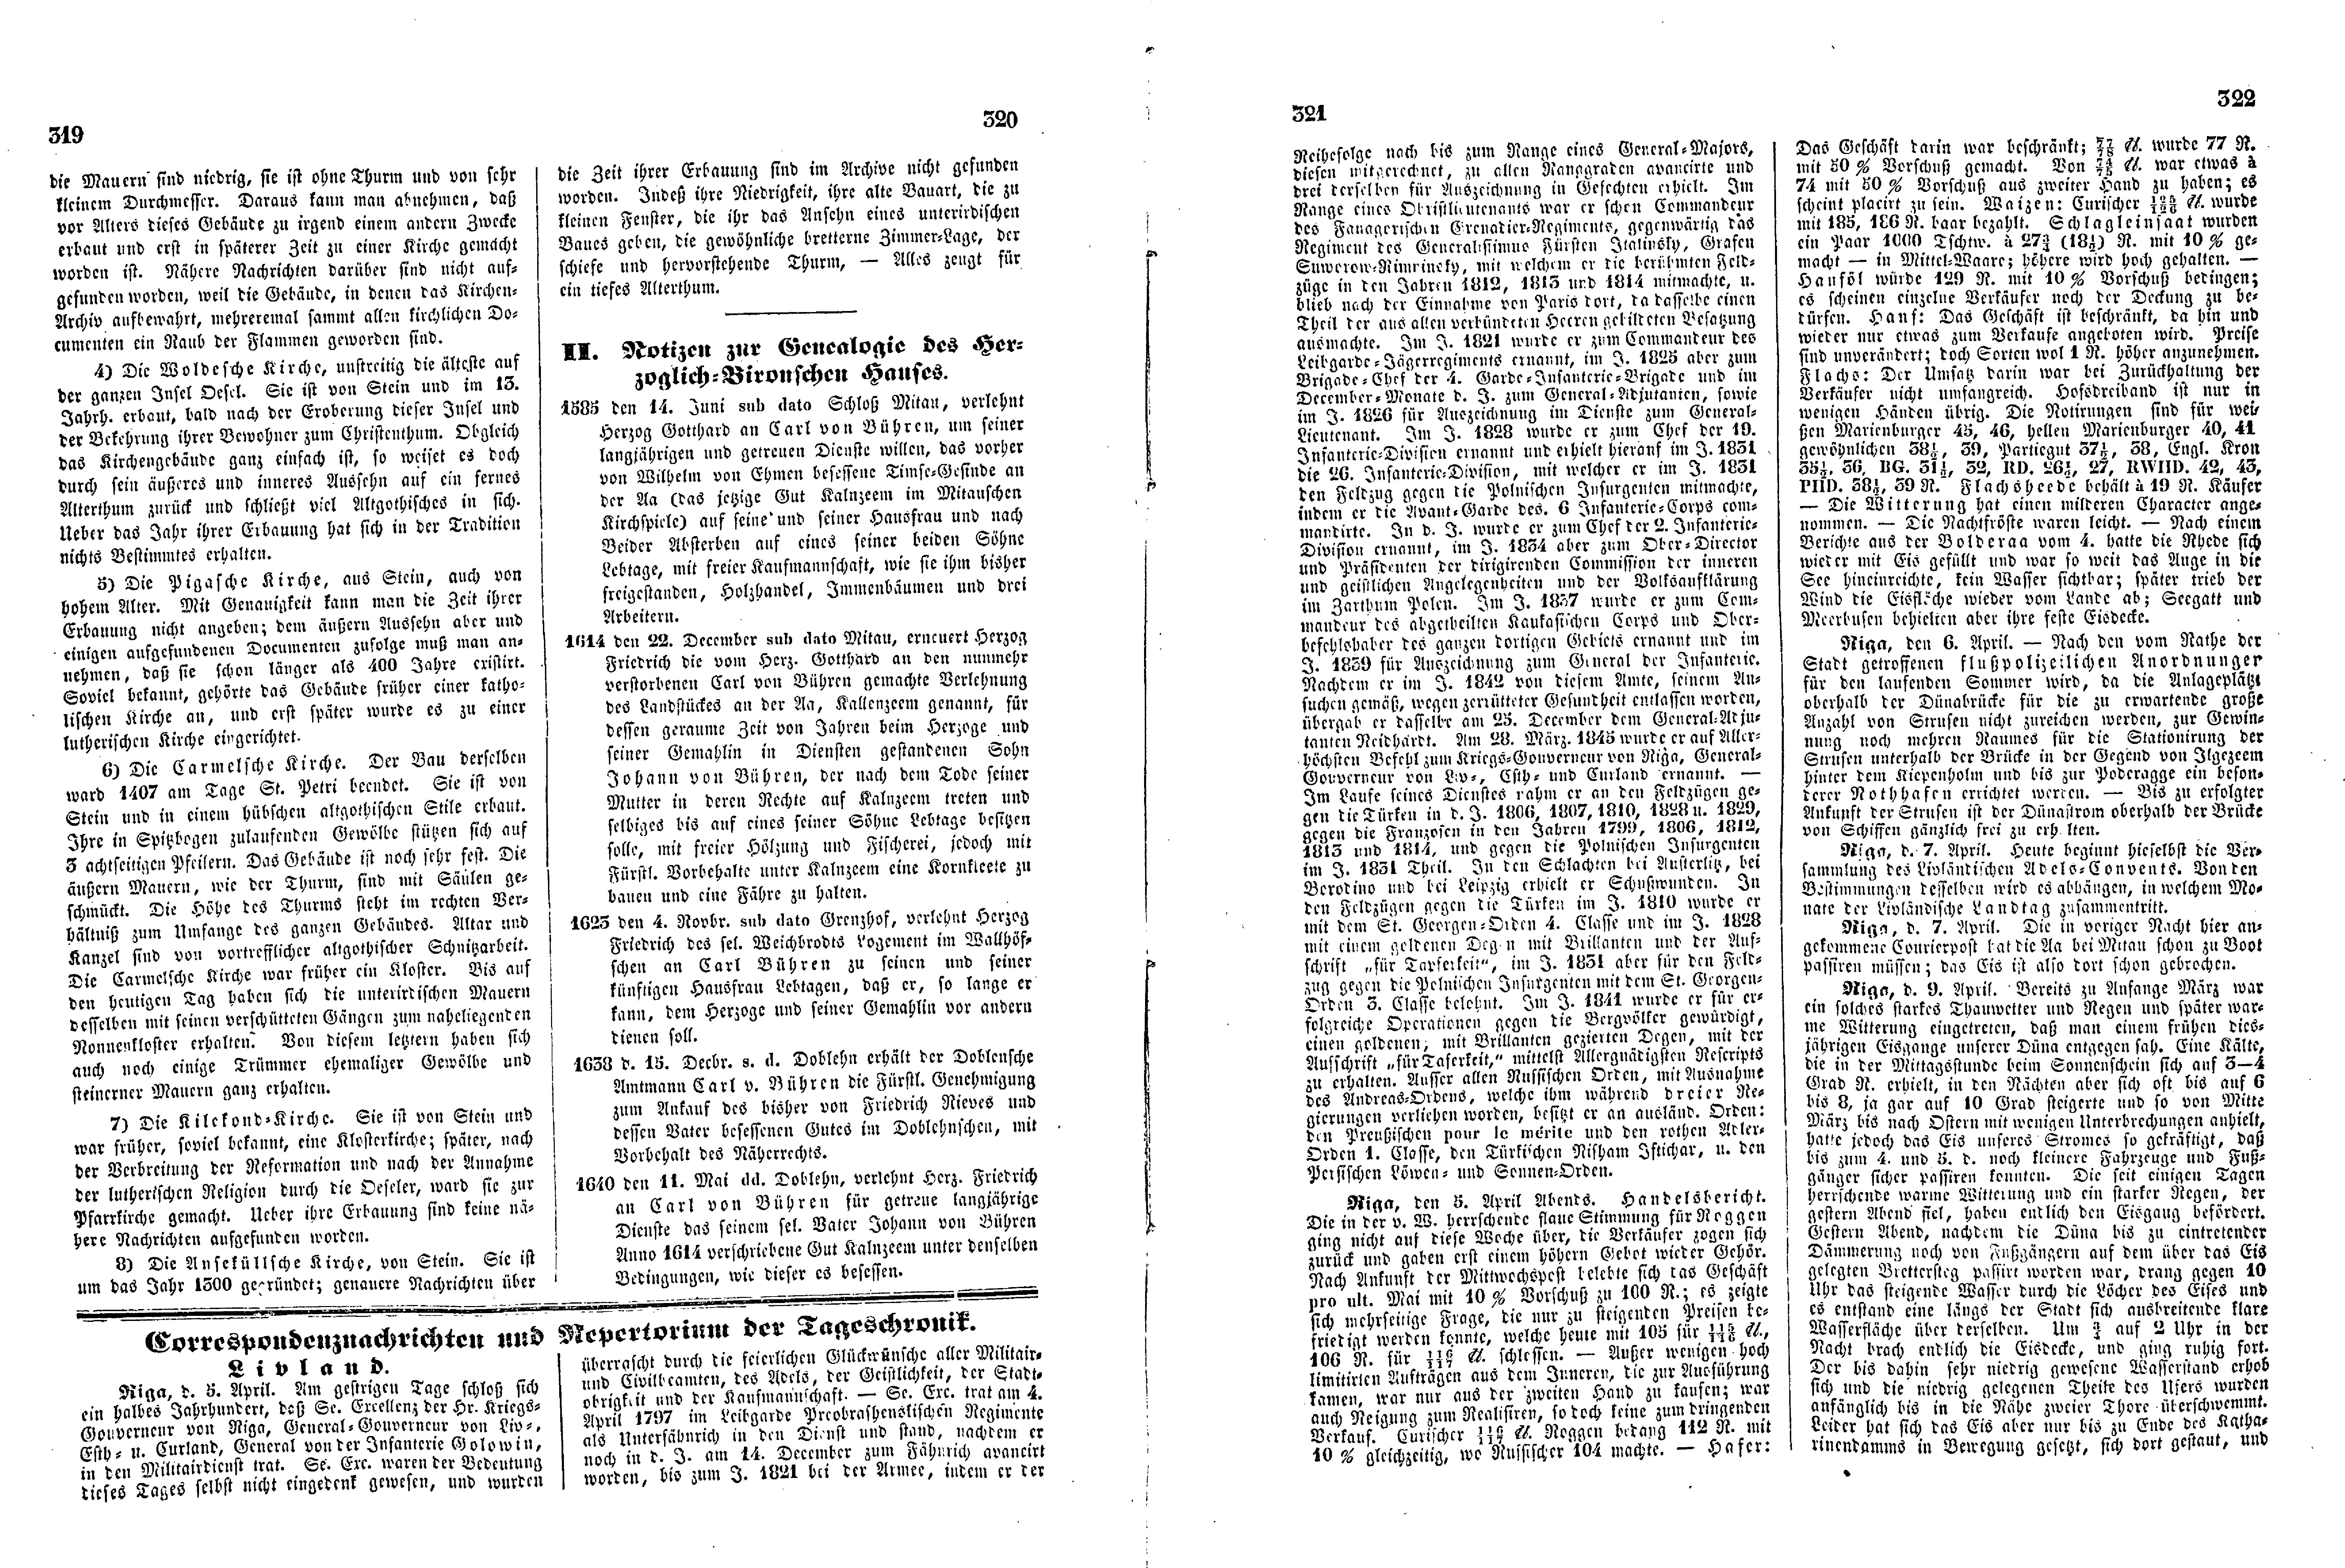 Das Inland [12] (1847) | 85. (319-322) Main body of text